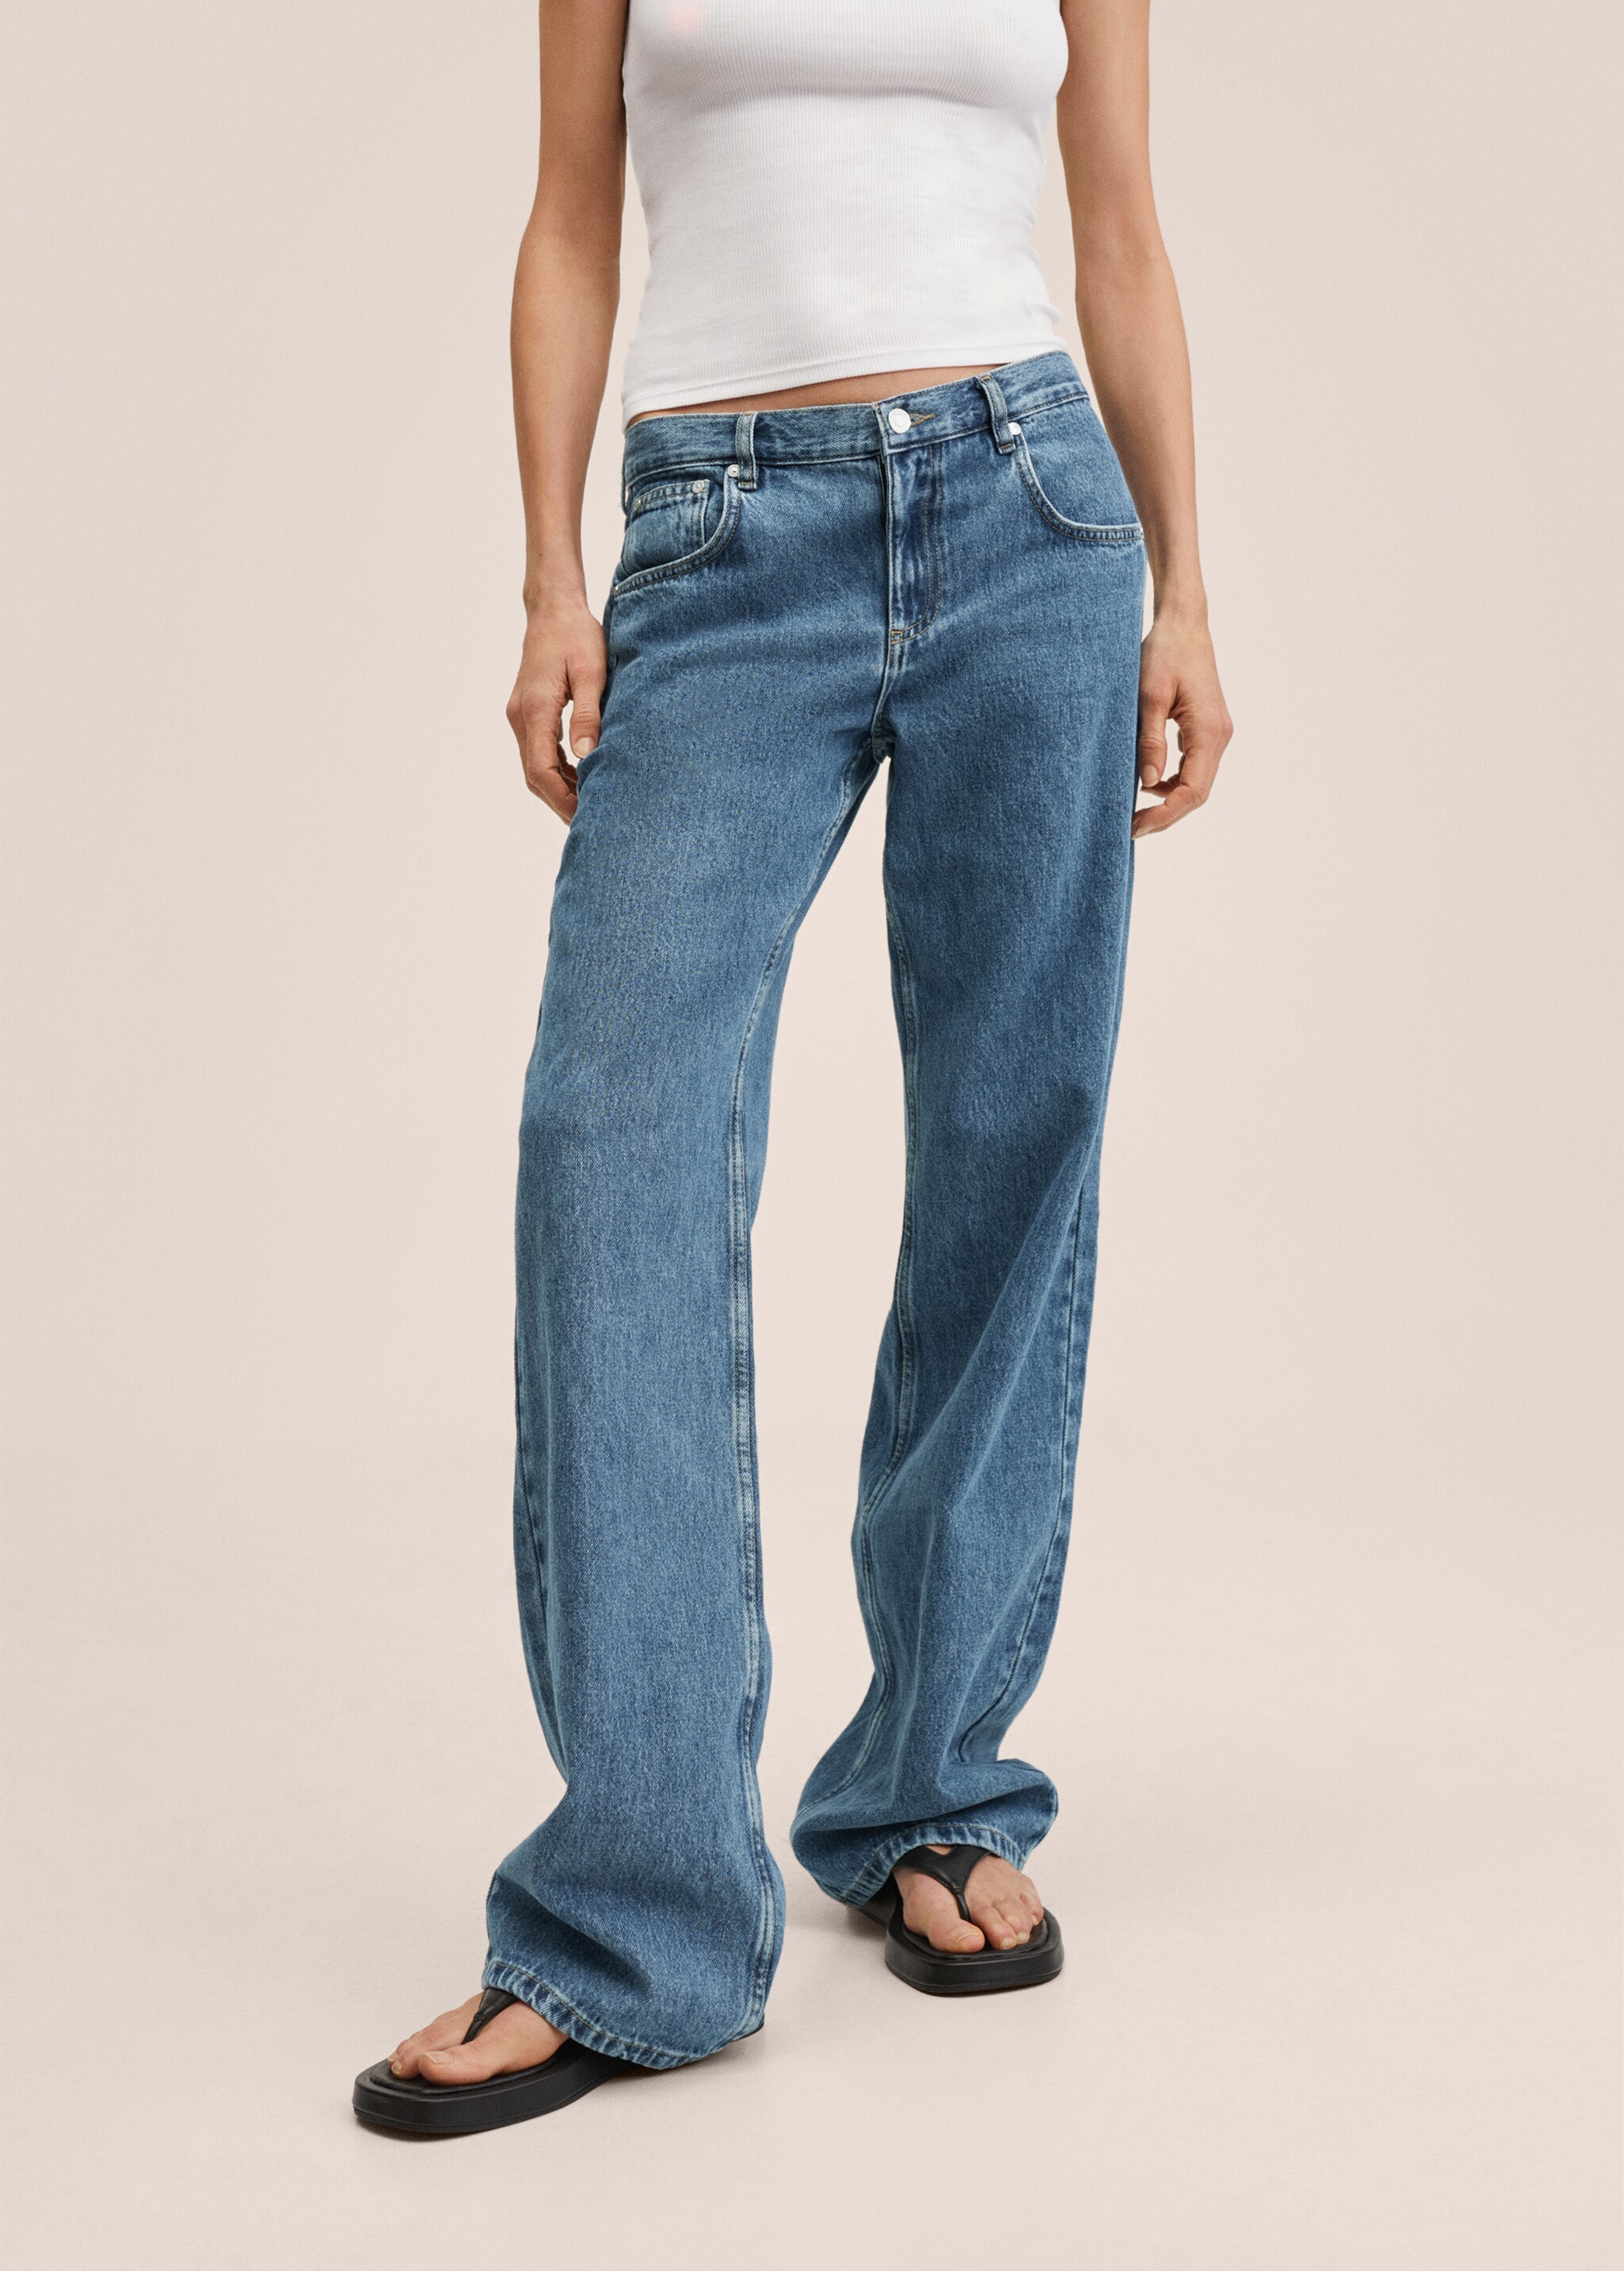 Low waist wideleg jeans - Medium plane